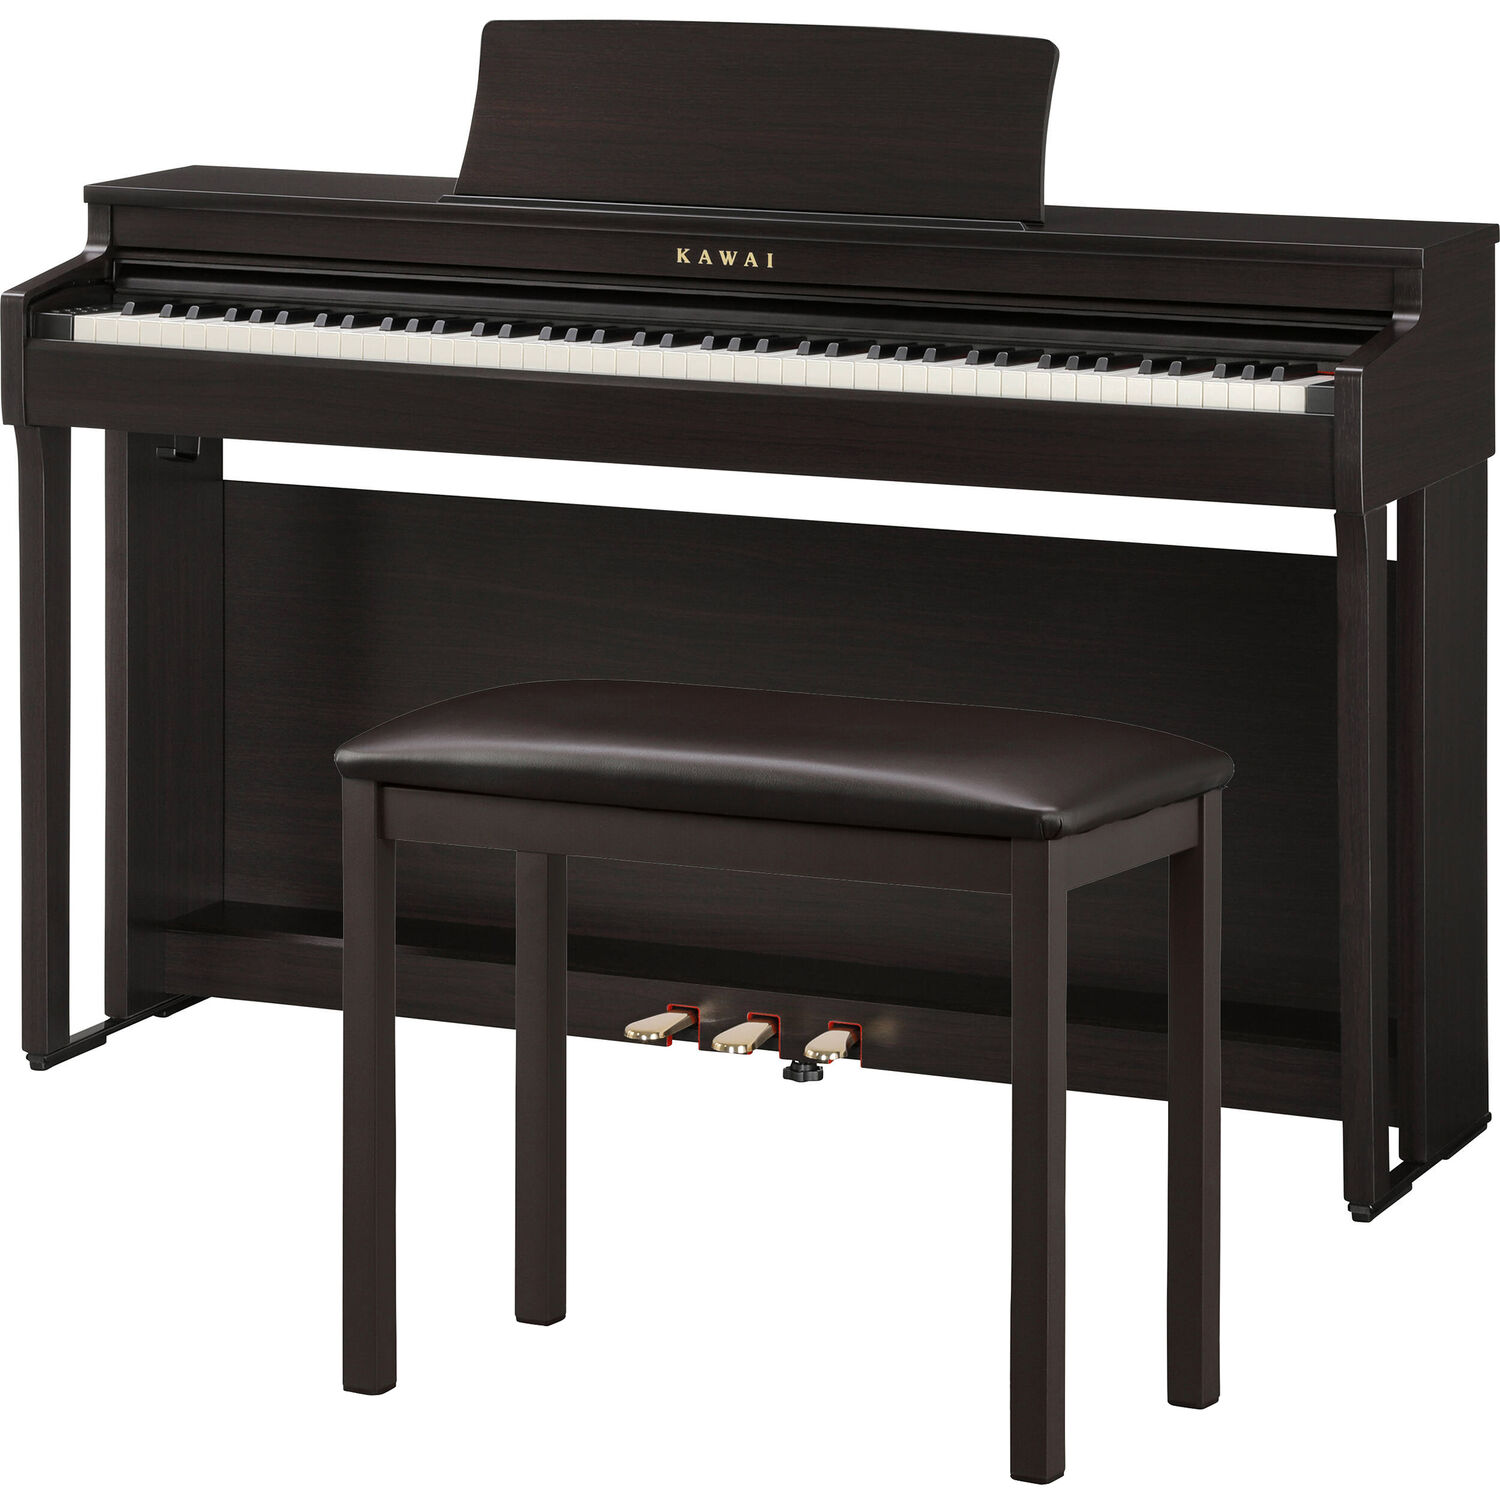 Piano Digital Kawai Cn201 con Banco a Juego Premium Rosewood